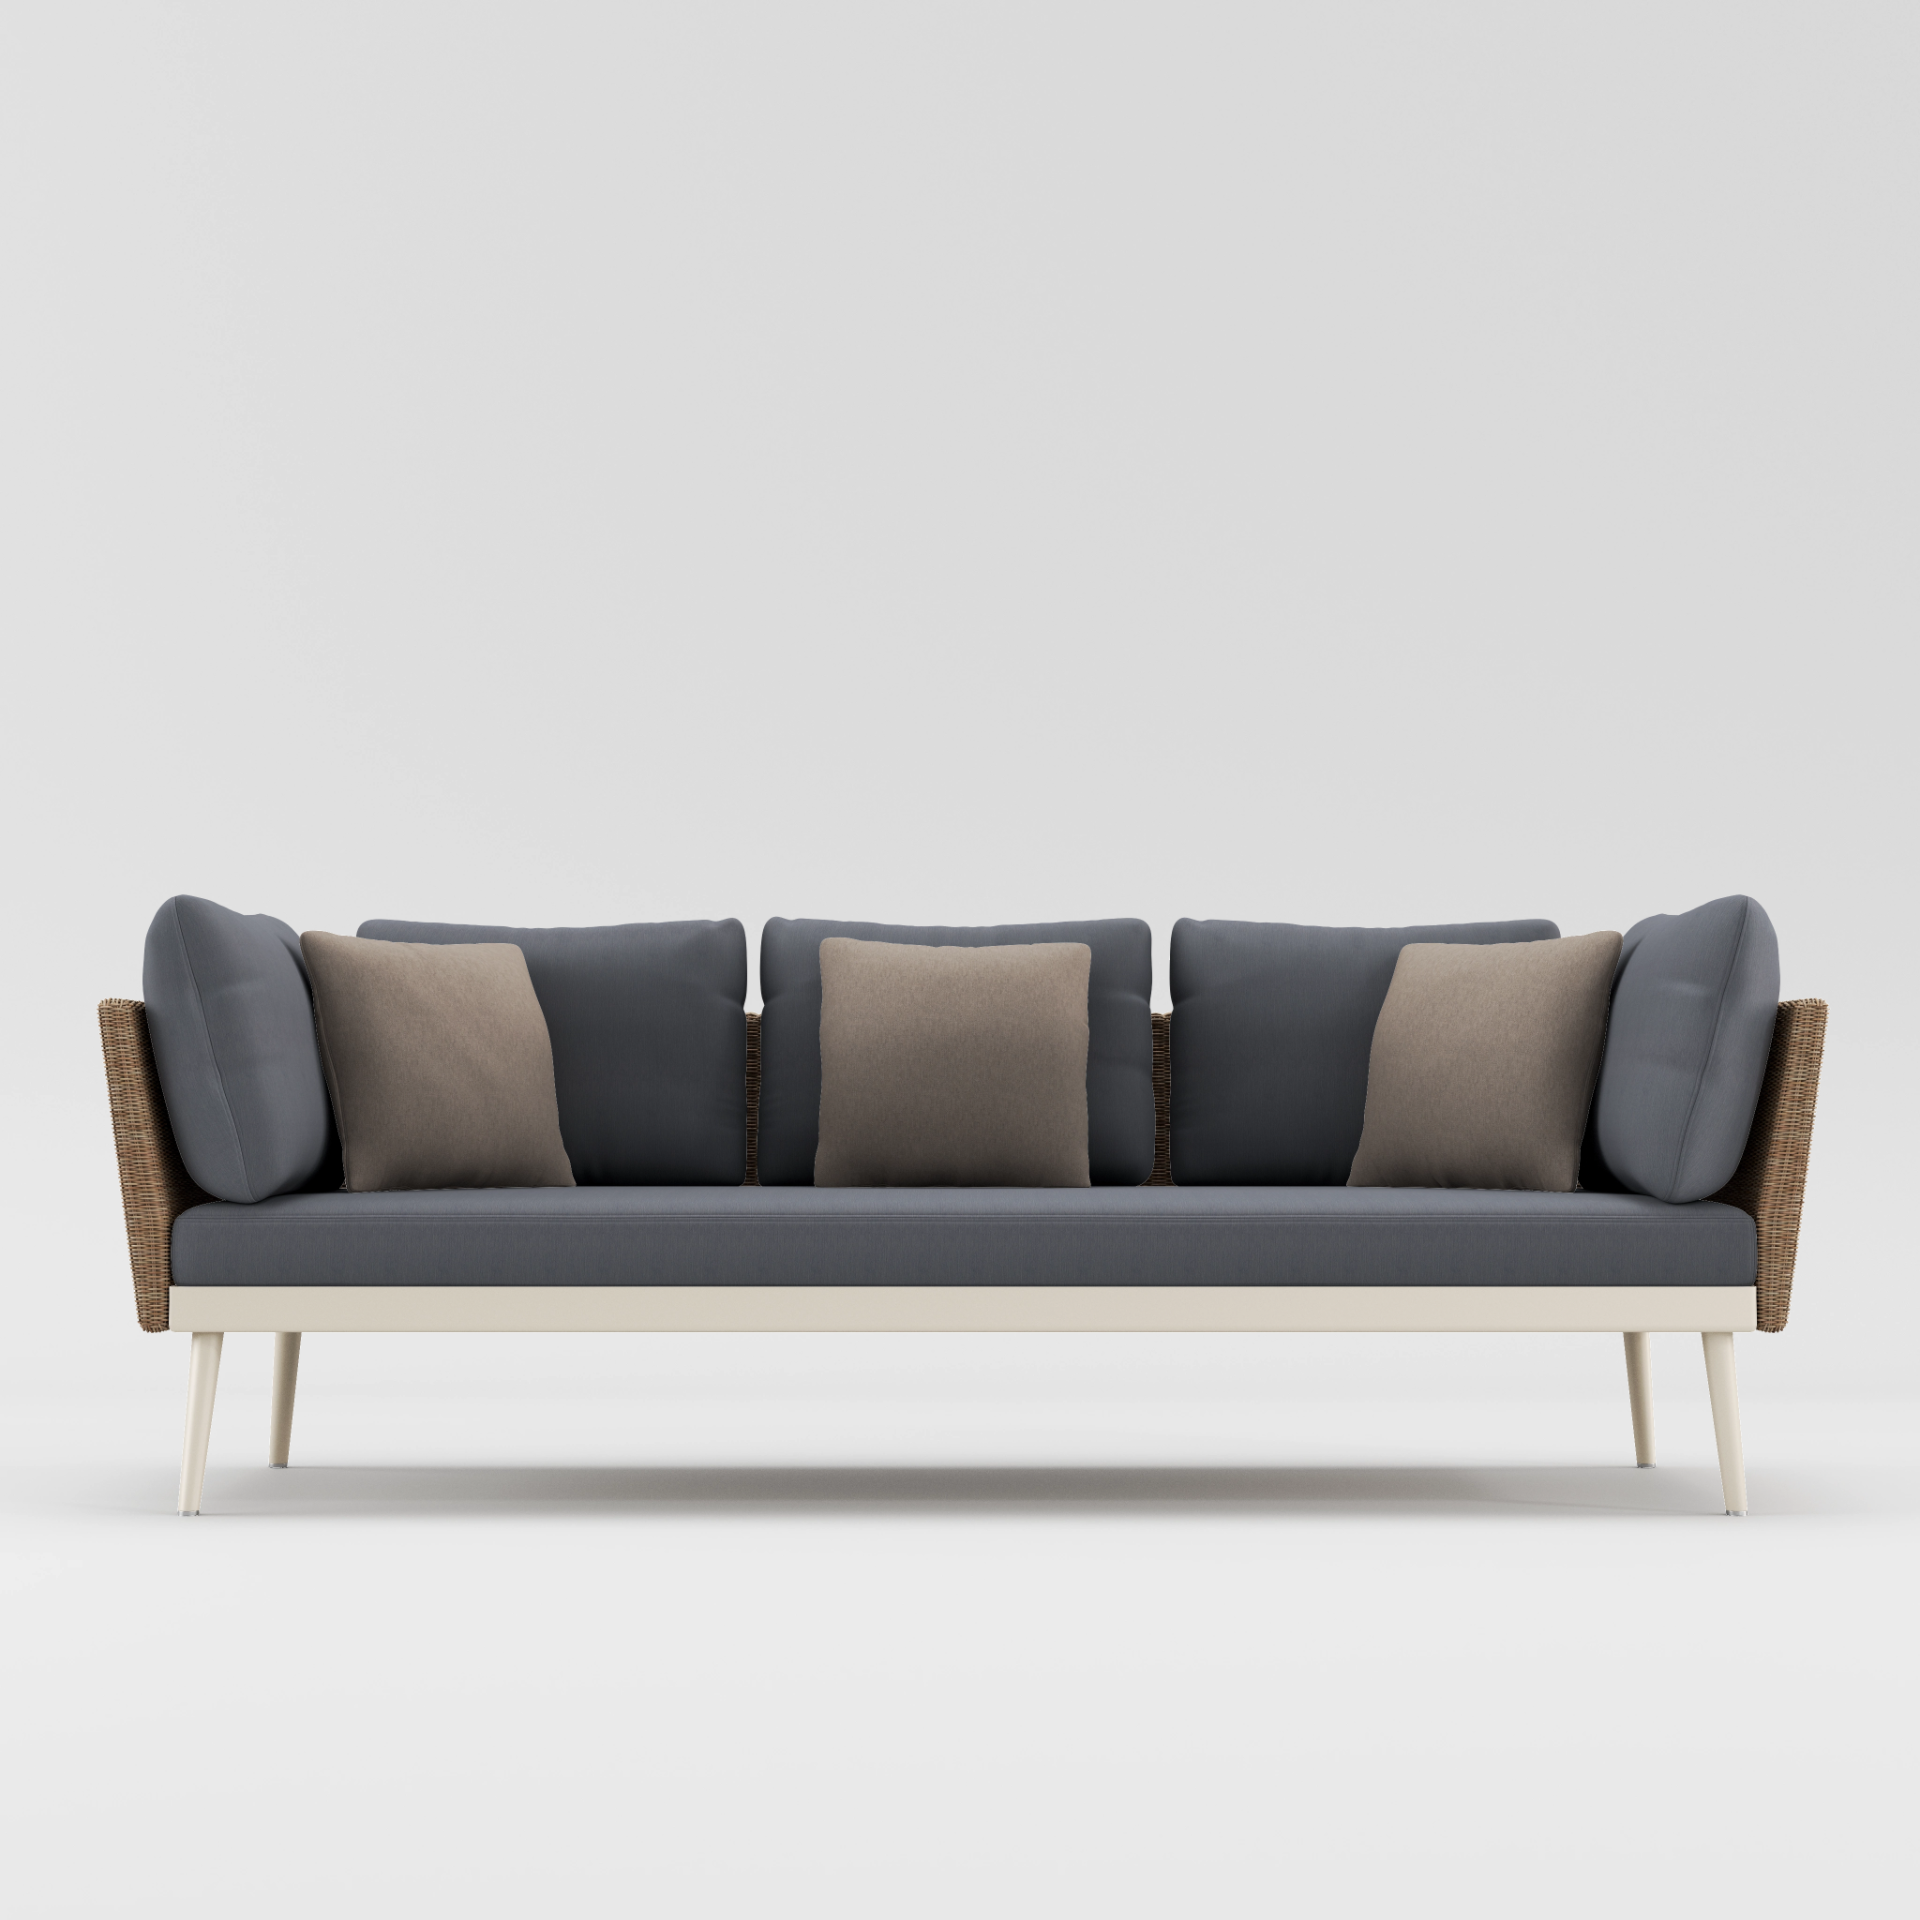 20TWENTY Sofa by Brown Jordan